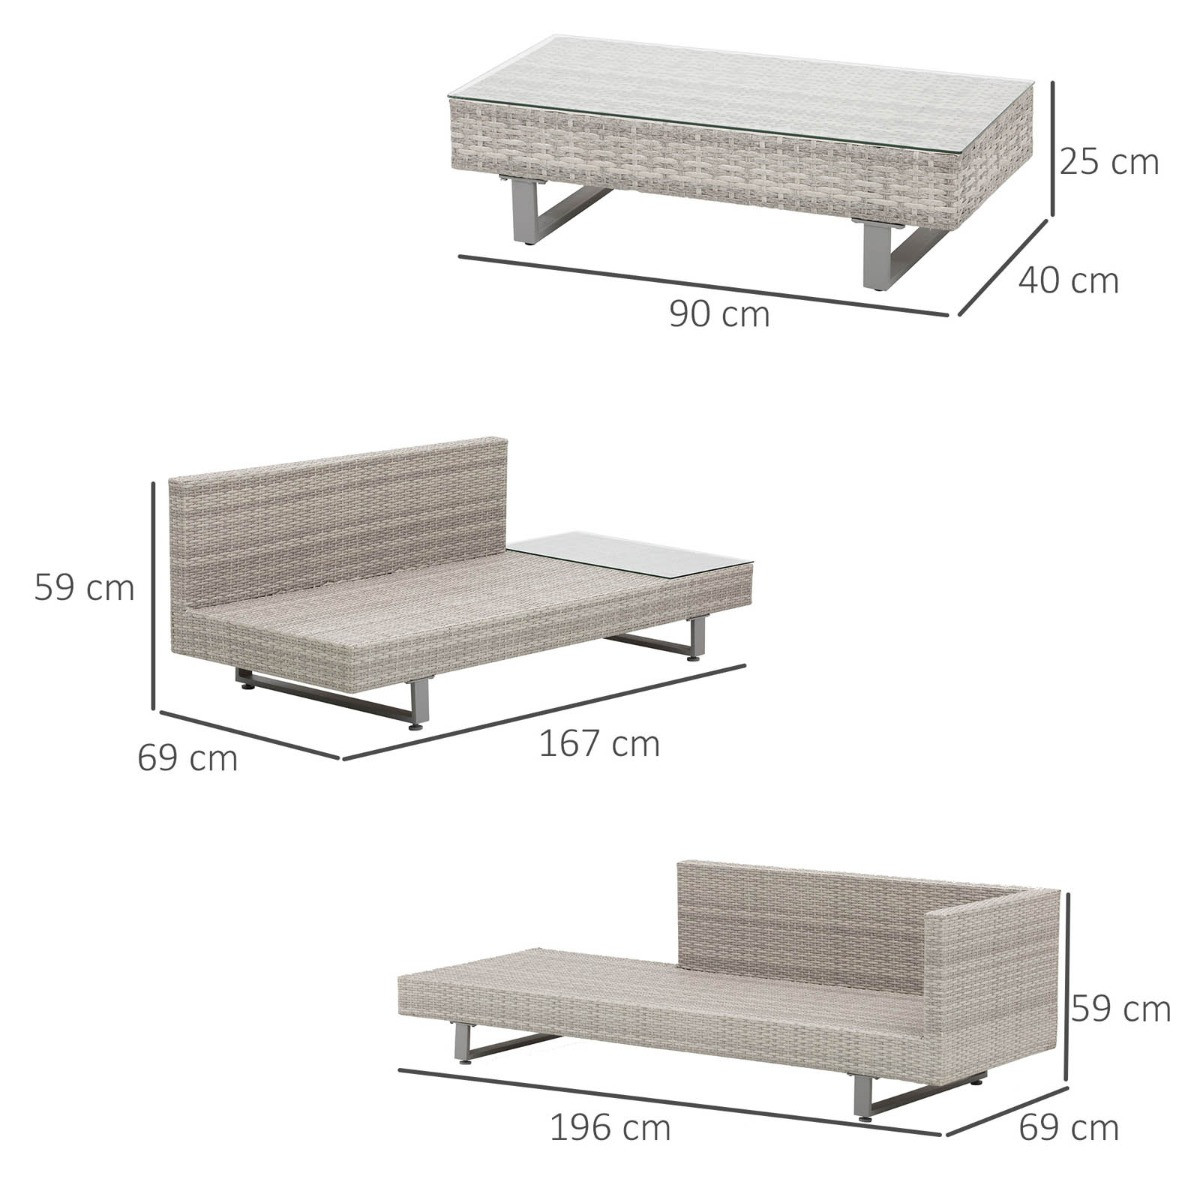 Outsunny Rattan Wicker Corner Sofa Set, Light Grey - 5 Seater>